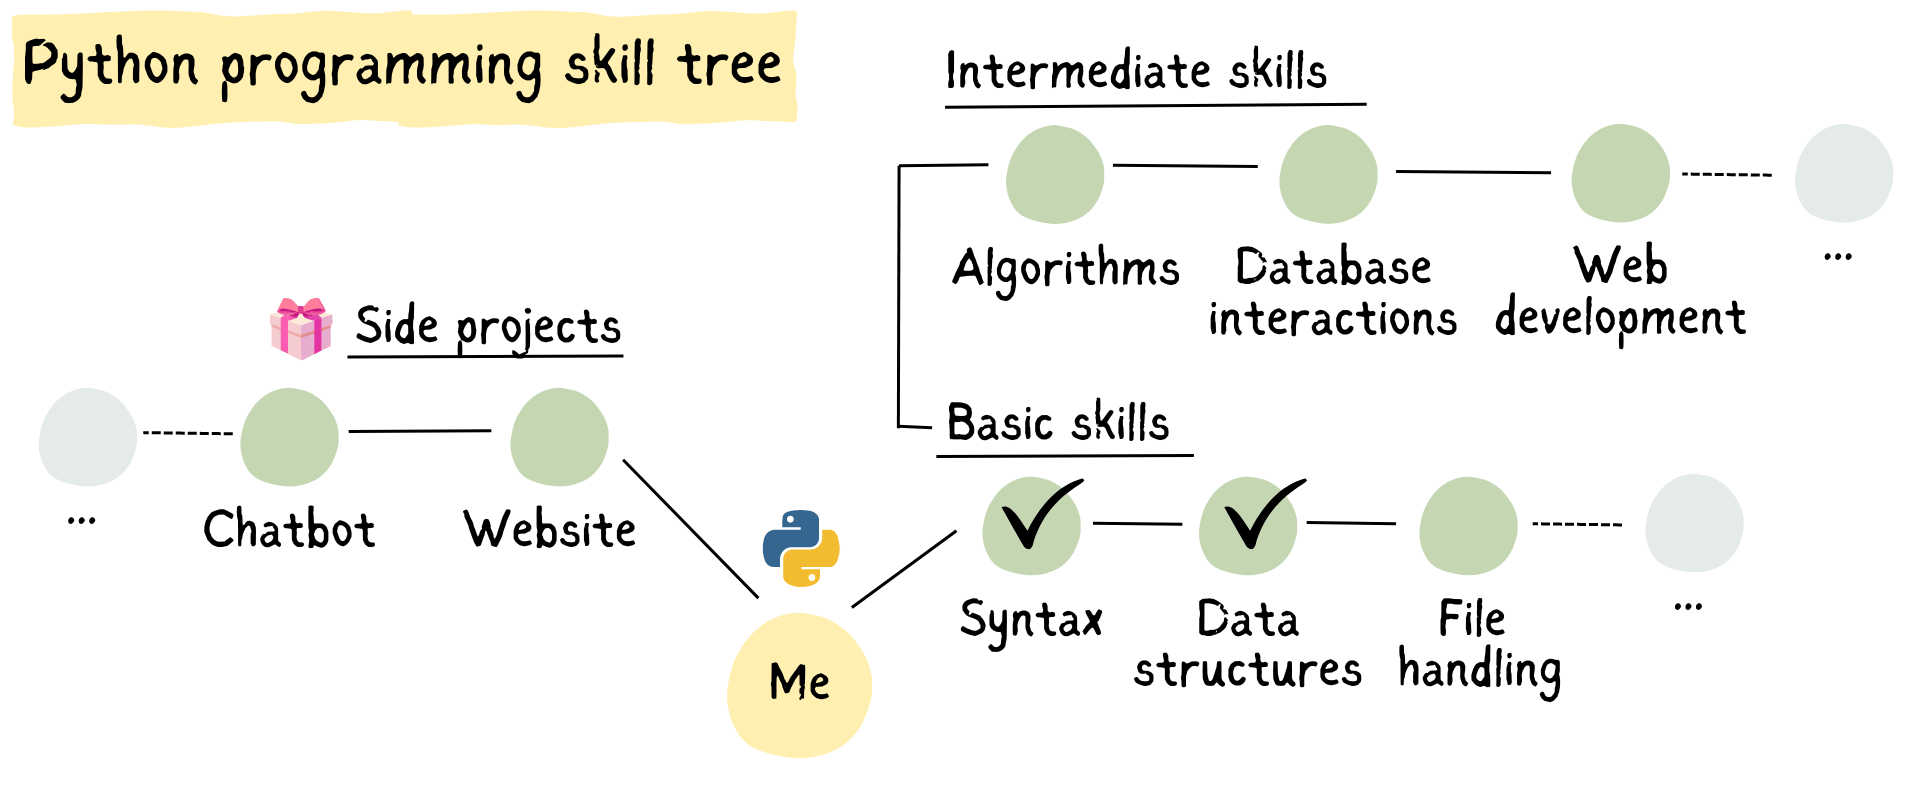 Python programming skill tree